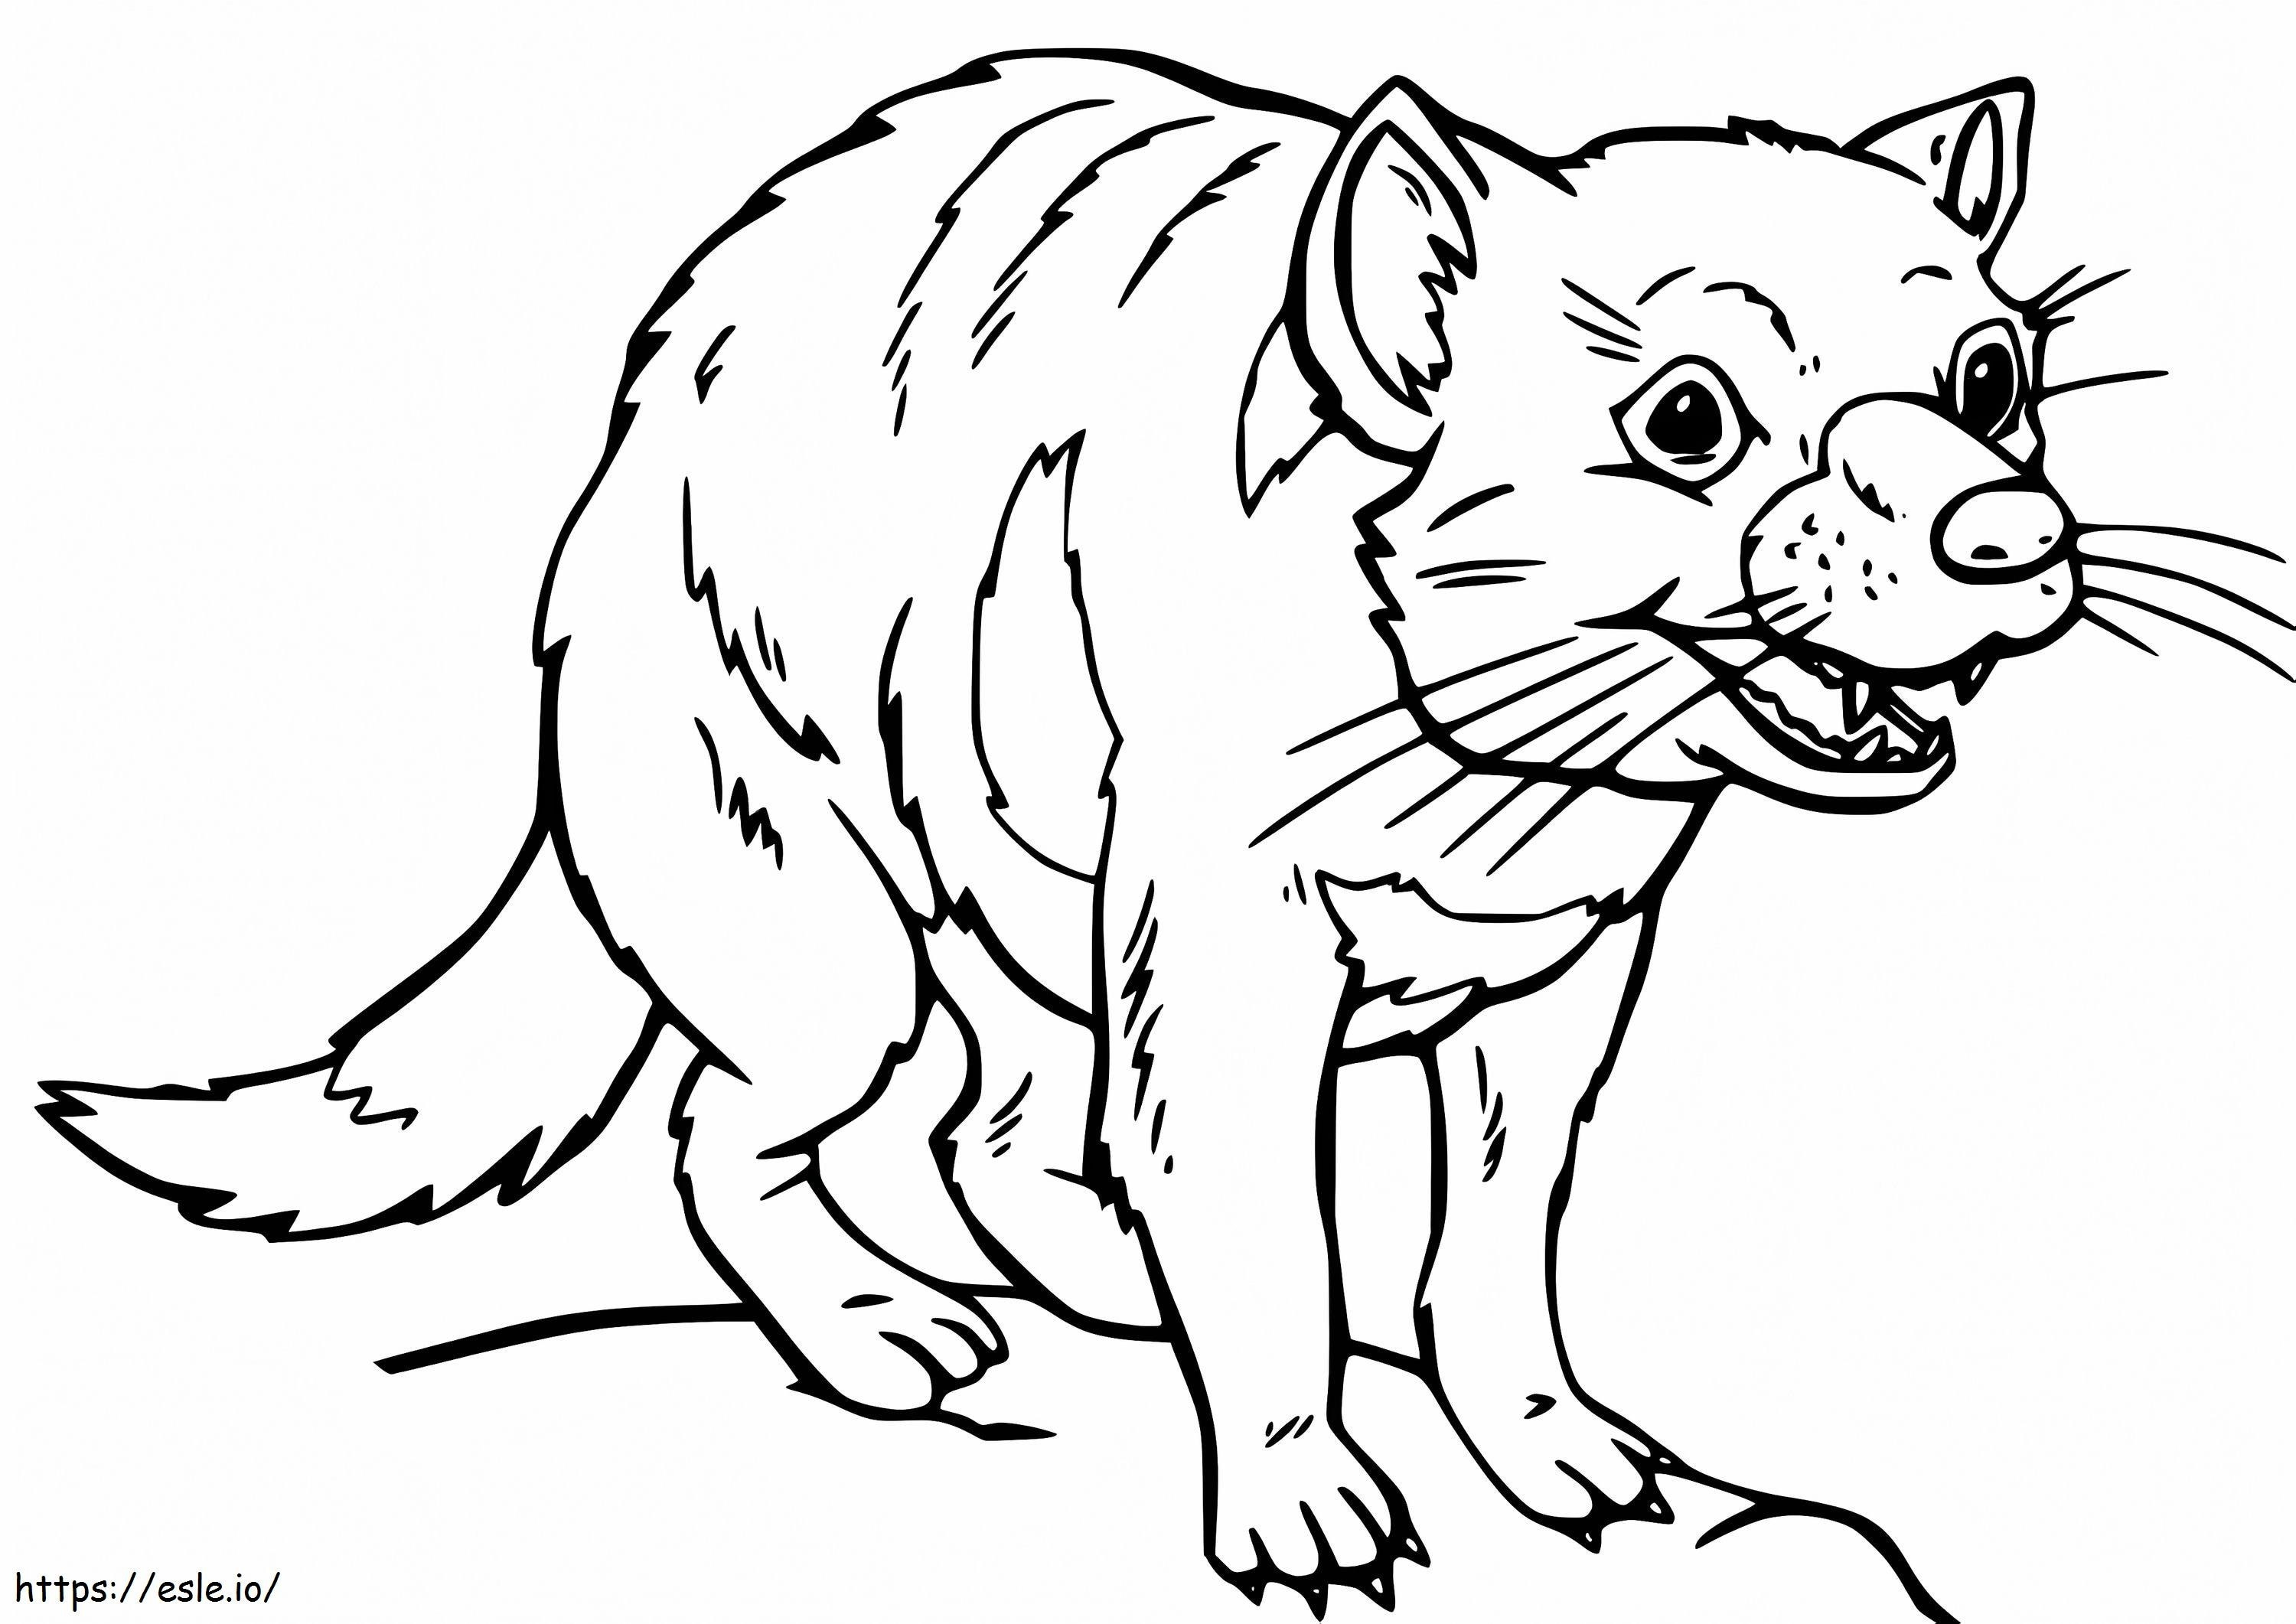 Funny Tasmanian Devil coloring page